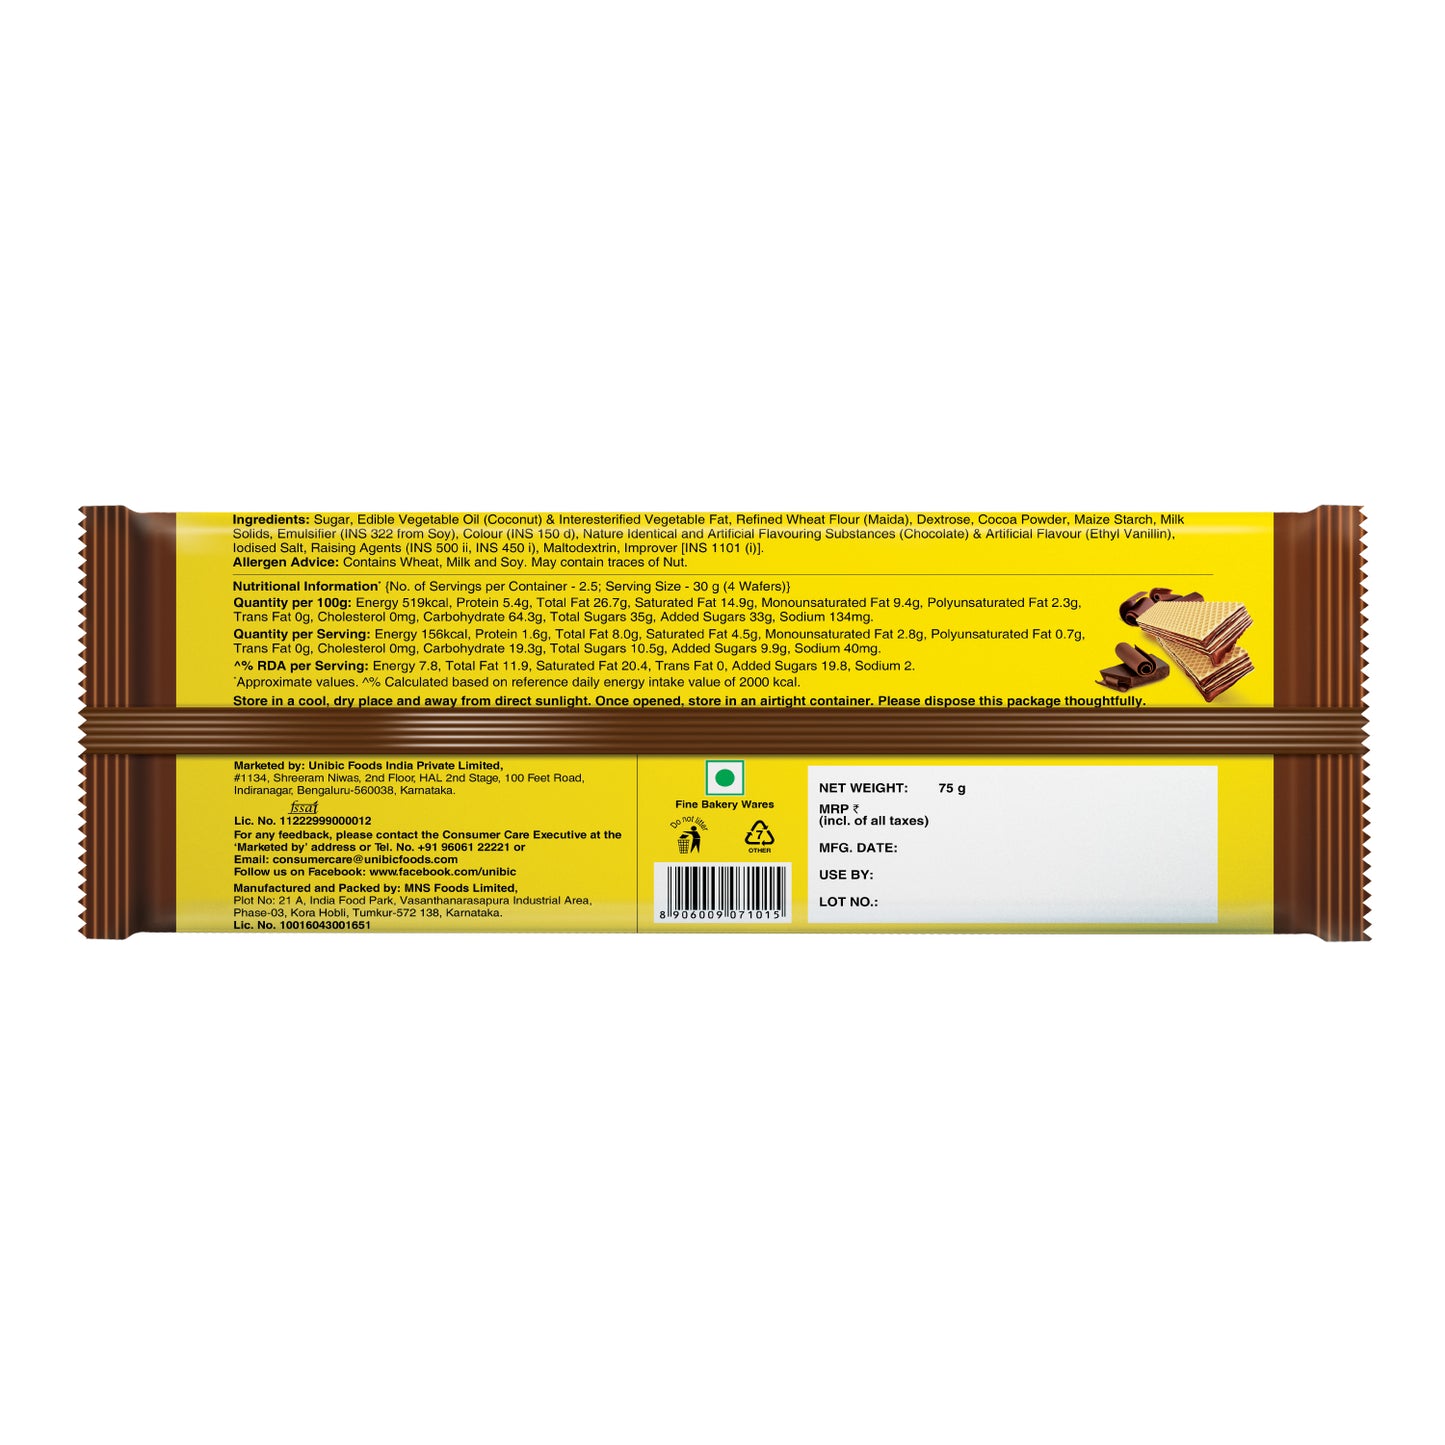 Unibic Rich Chocolate Wafers - 75gm